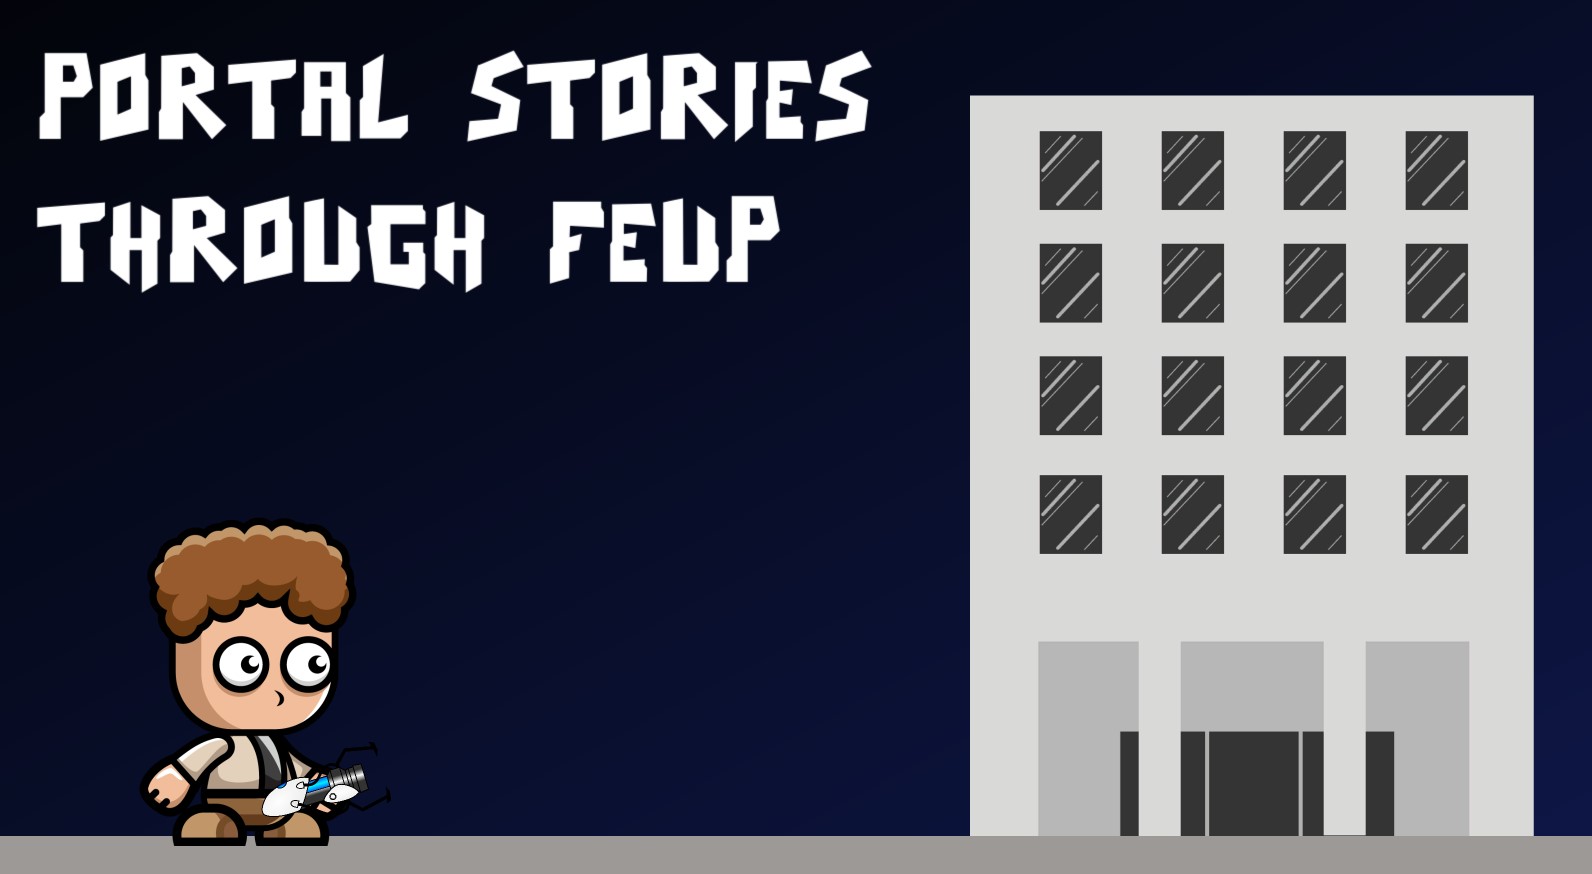 Portal Stories: Through FEUP